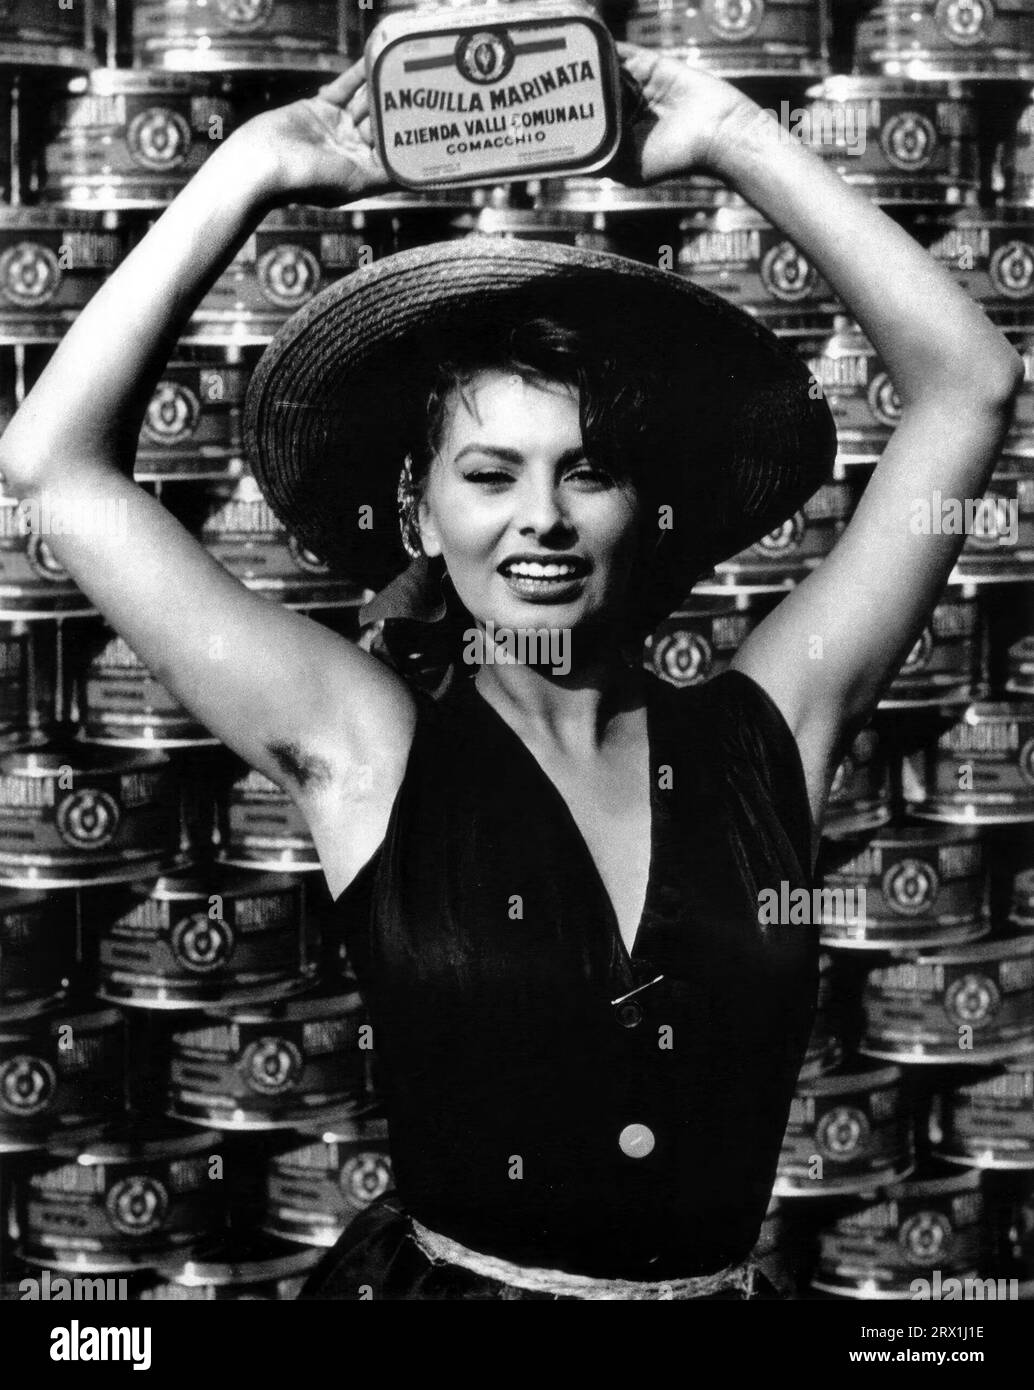 SOPHIA LOREN in THE RIVER GIRL (1955) -Original title: LA DONNA DEL FIUME-, directed by MARIO SOLDATI. Credit: PONTI-DE LAURENTIIS CINEMATOGRAFICA / Album Stock Photo